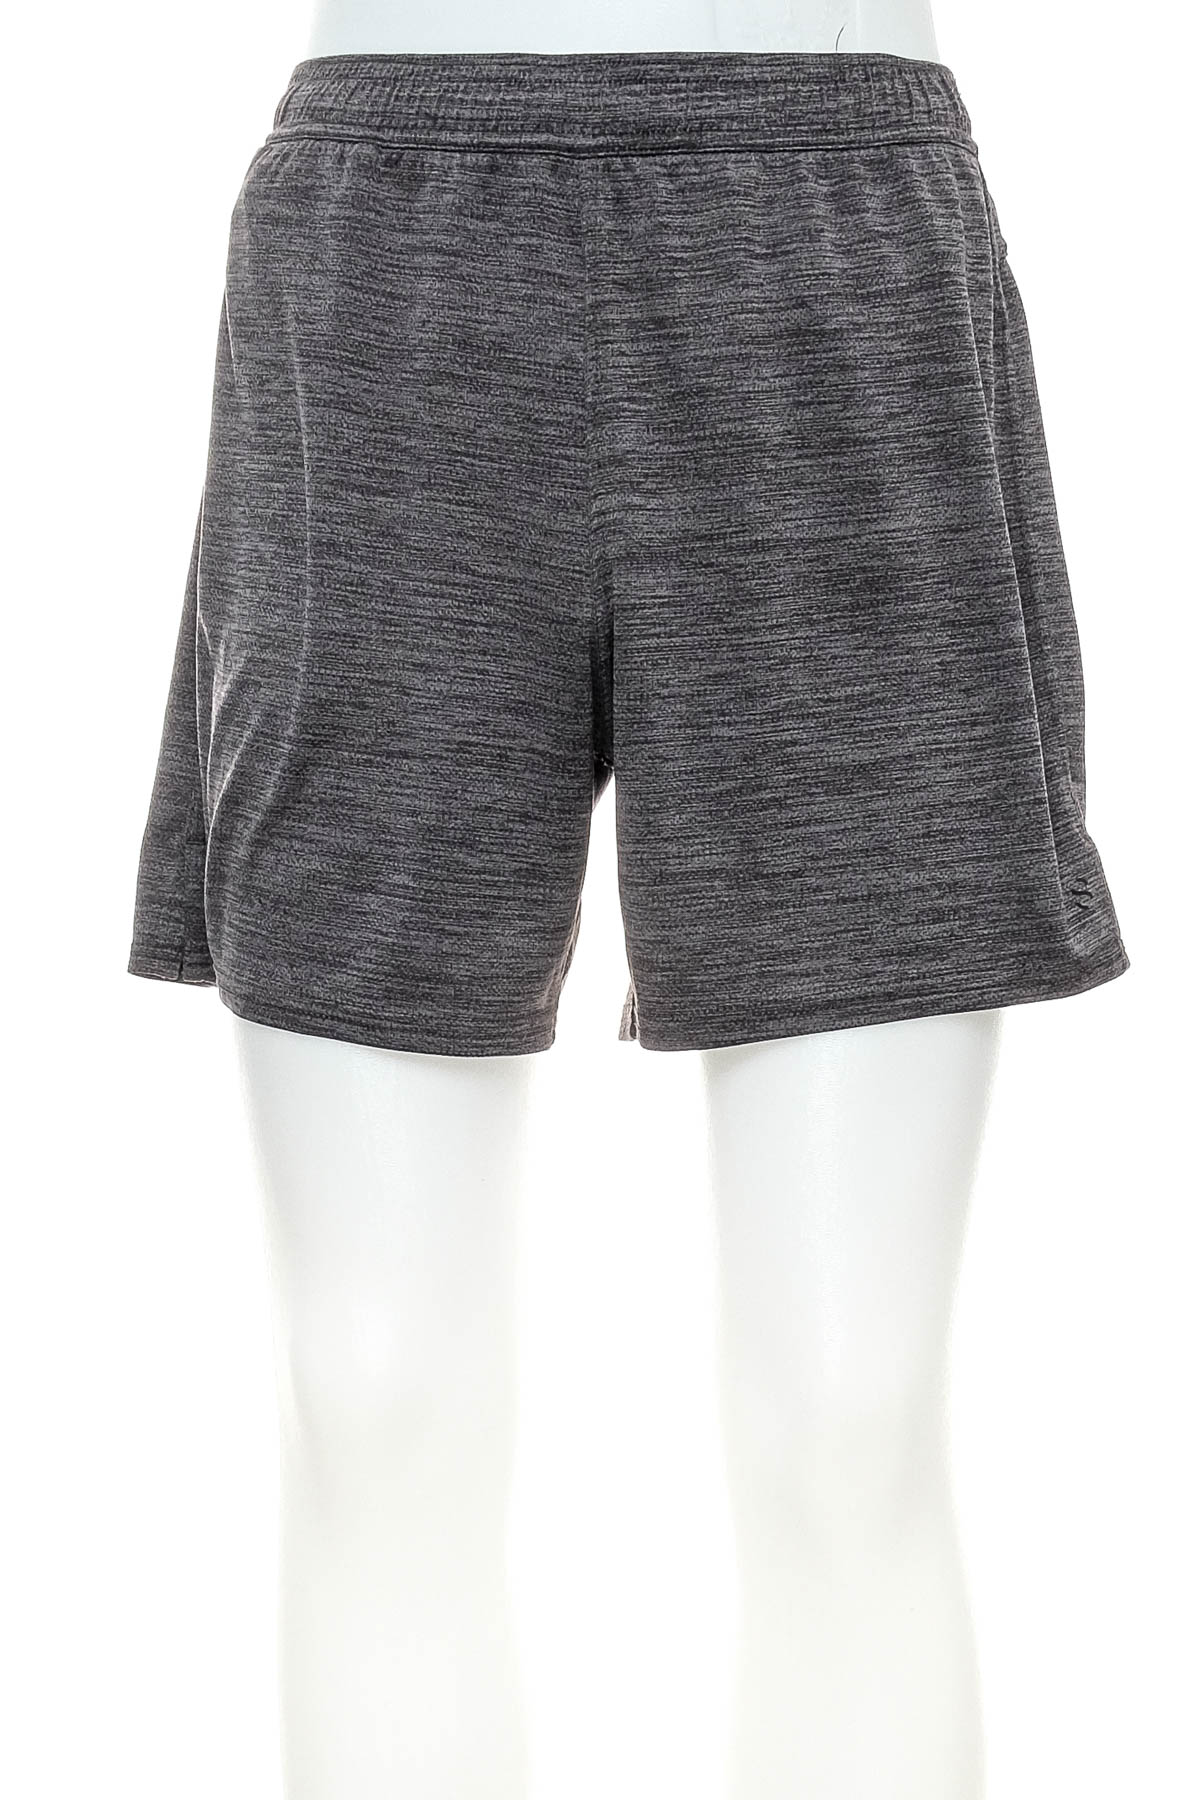 Female shorts - H&M Sport - 0